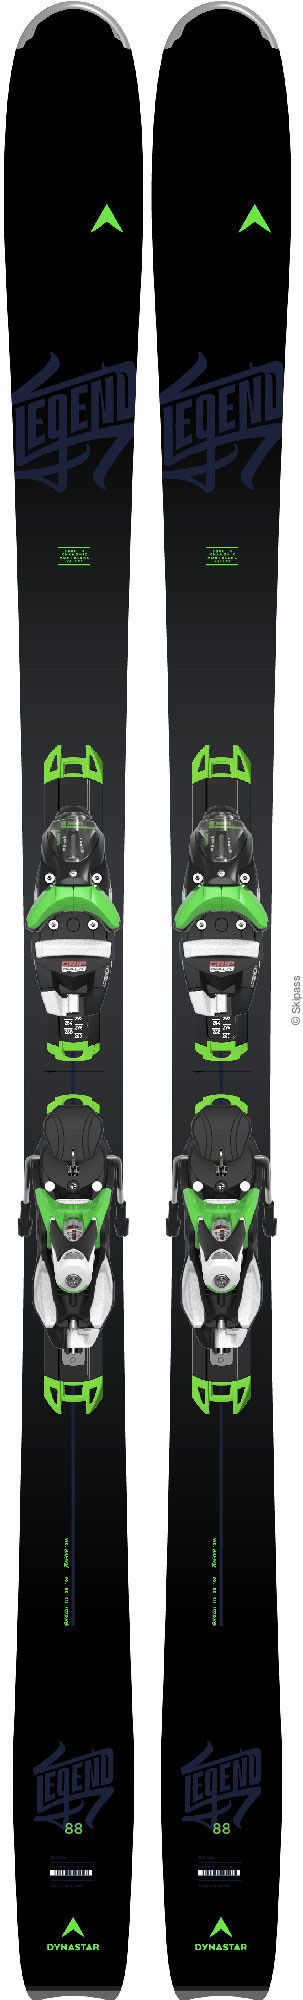 Pack skis LEGEND 88 2020 + Fixations NX12 K DUAL B90